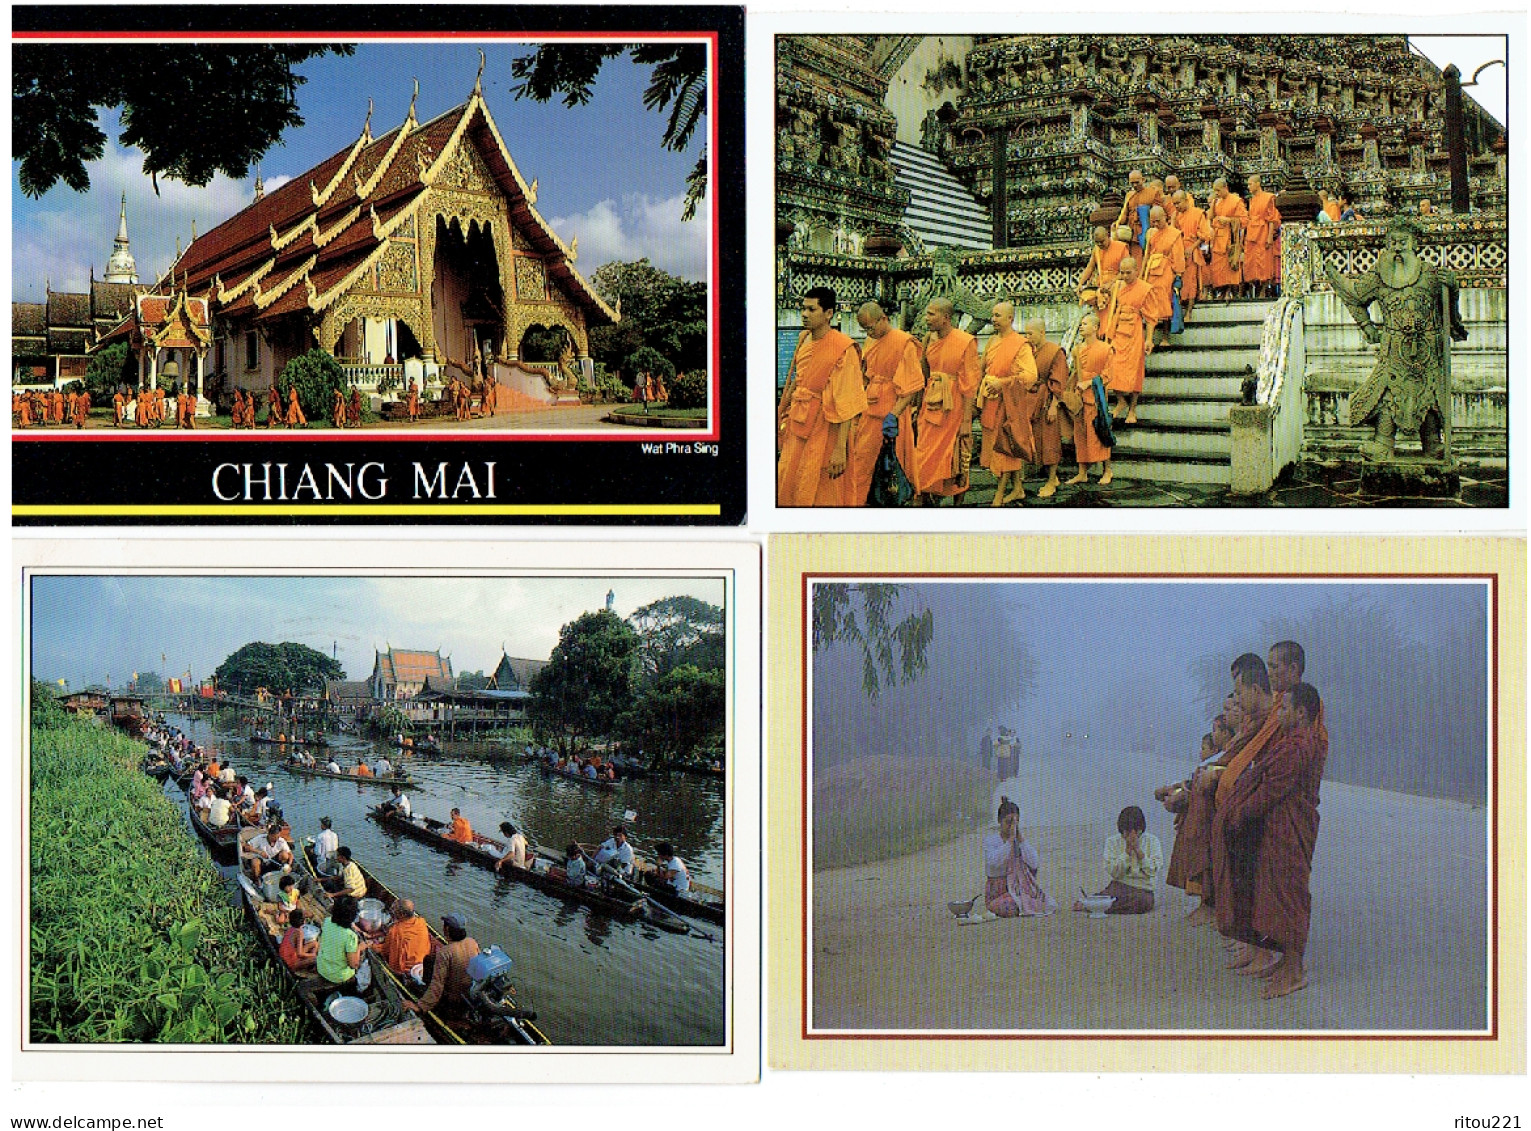 Lot 4 Cpm - Thaïlande - WAT PHRA SING CHIANG MAI - THAI LINES BANKOK - BUDDHIST LIFE - TEMPLE - Tailandia